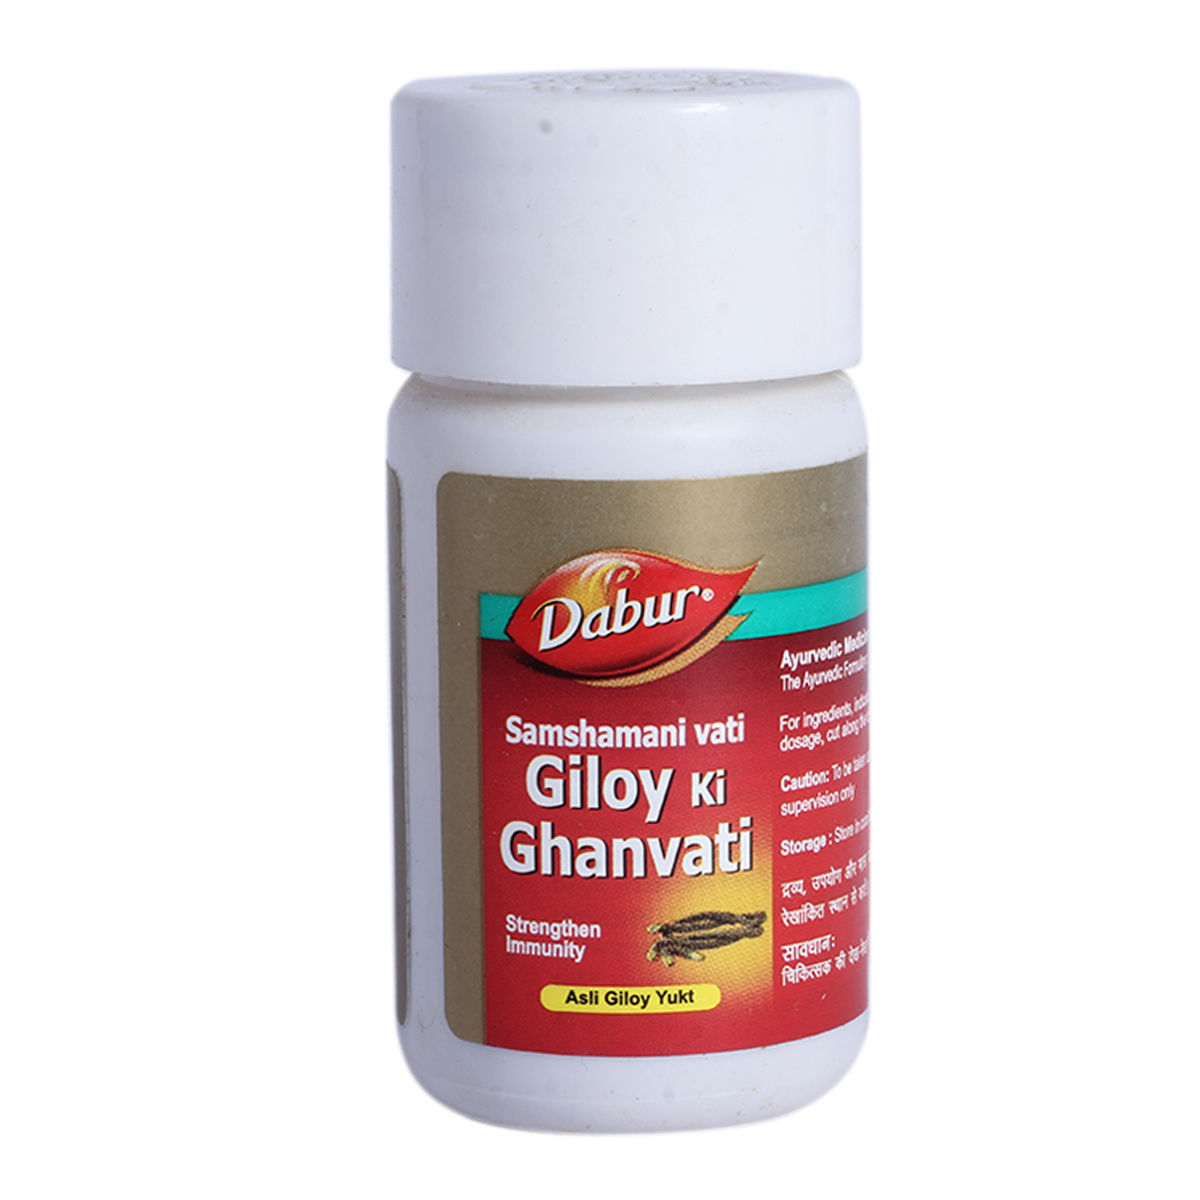 Dabur Giloy Ki Ghanvati, 40 Tablets, Pack of 1 